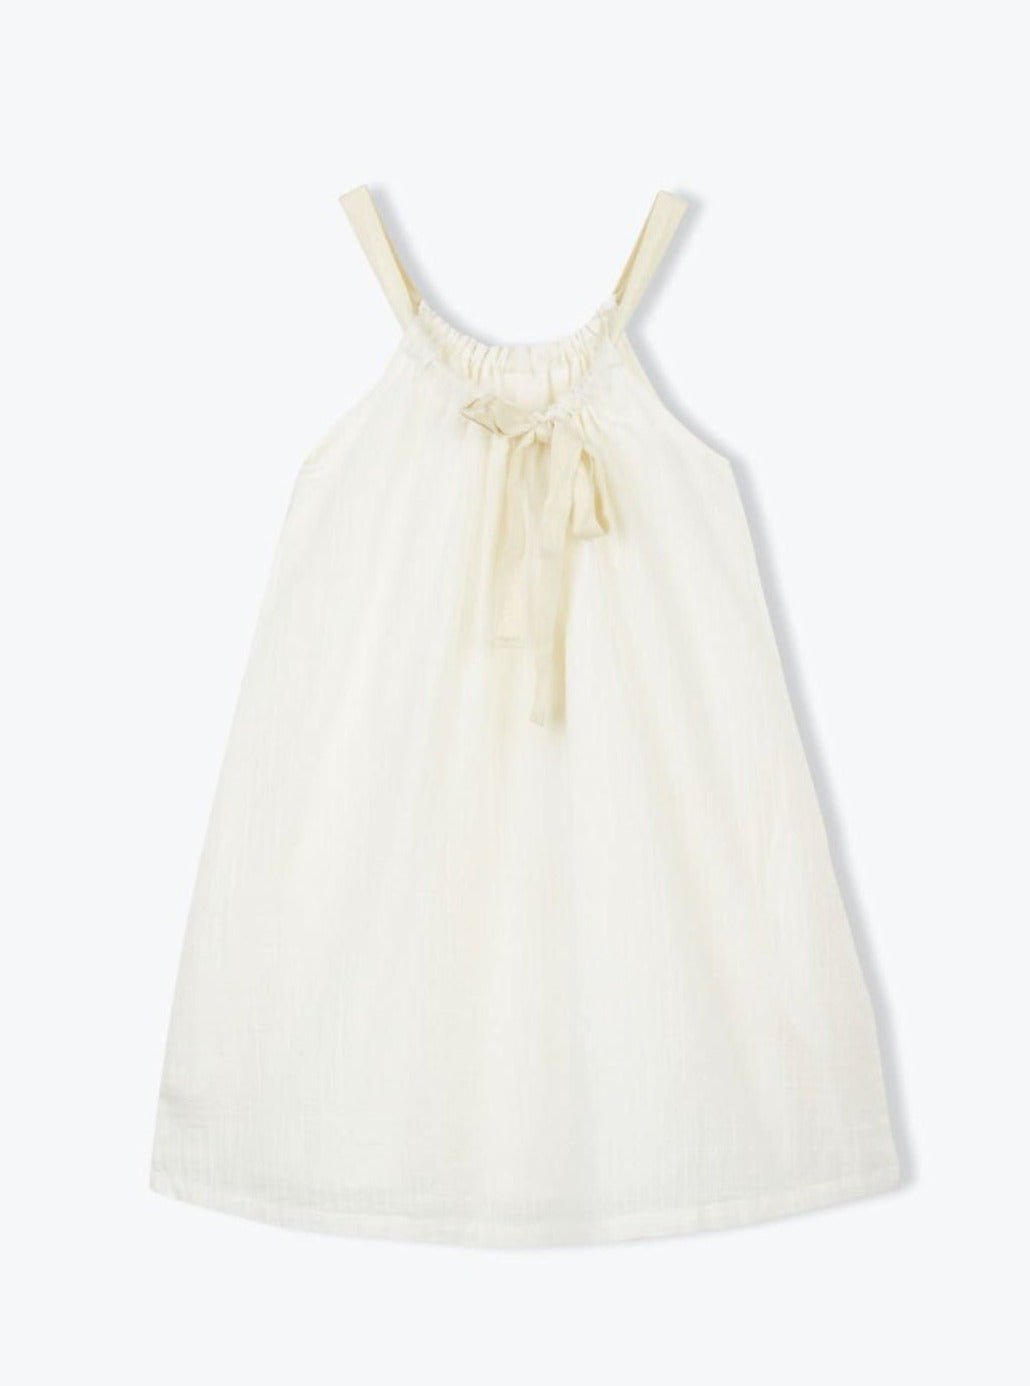 Kids white dress for birthday